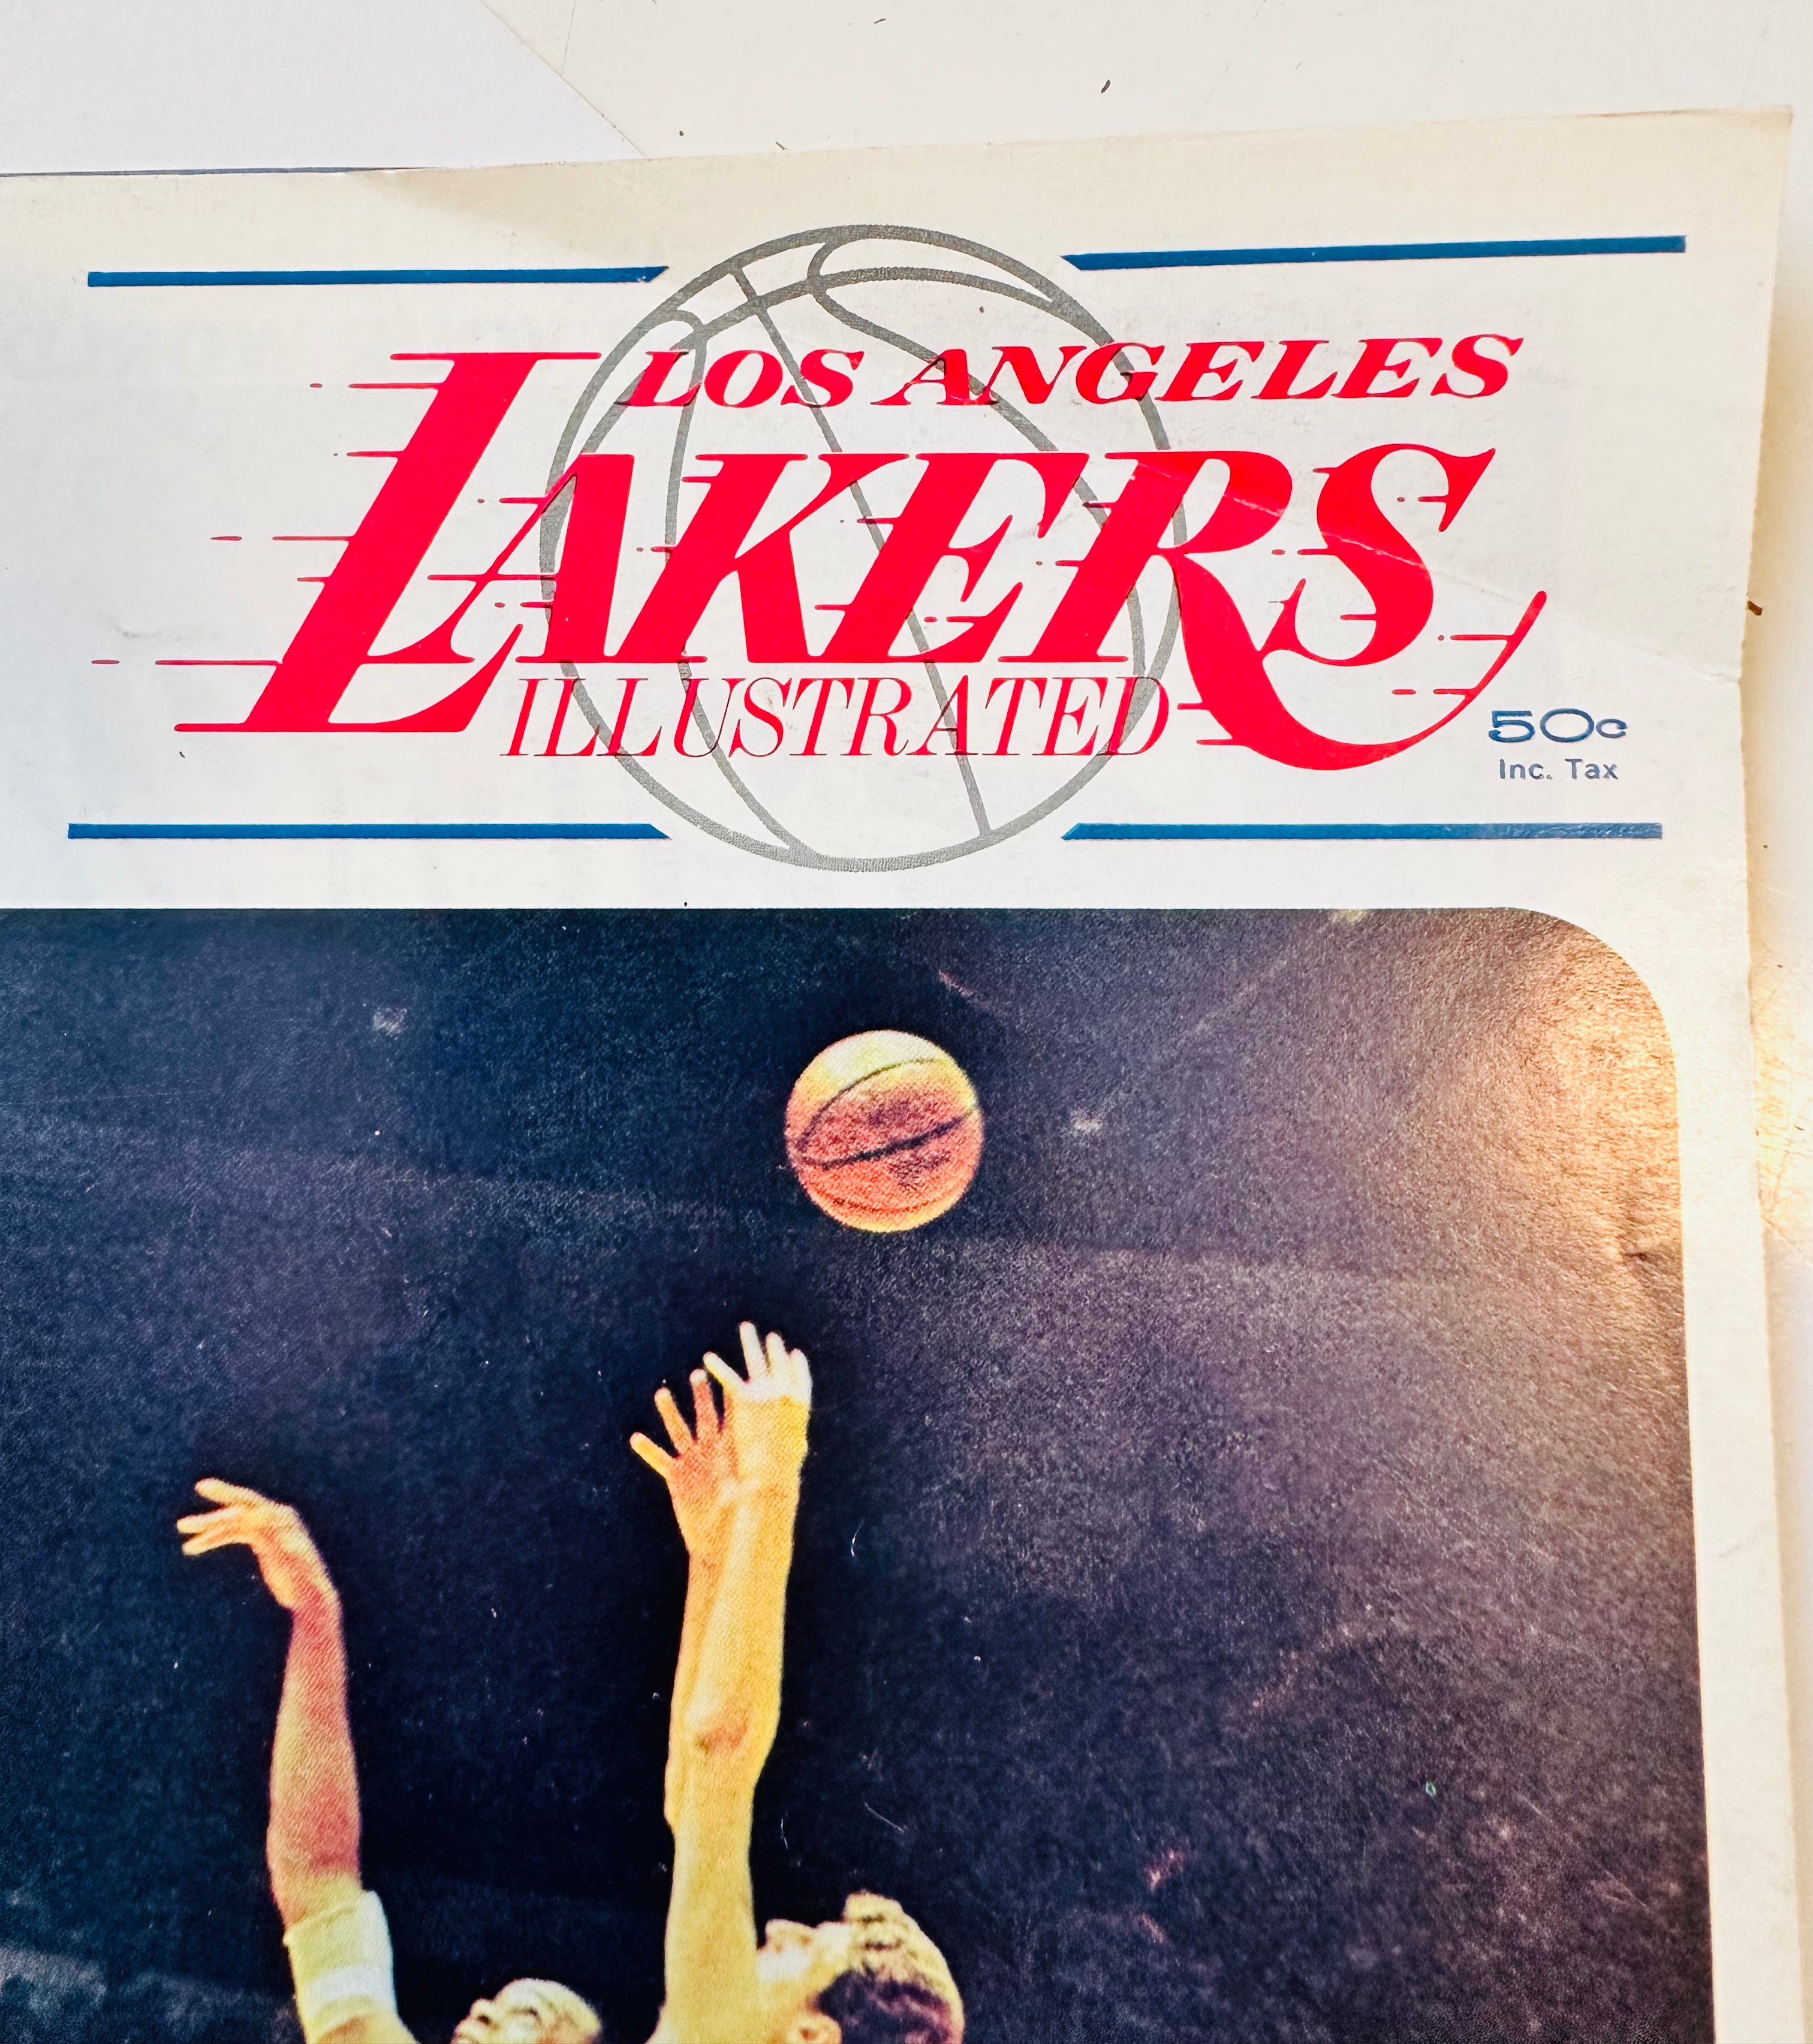 LA Lakers Vs San Diego Rockets rare ABA basketball game program 1968